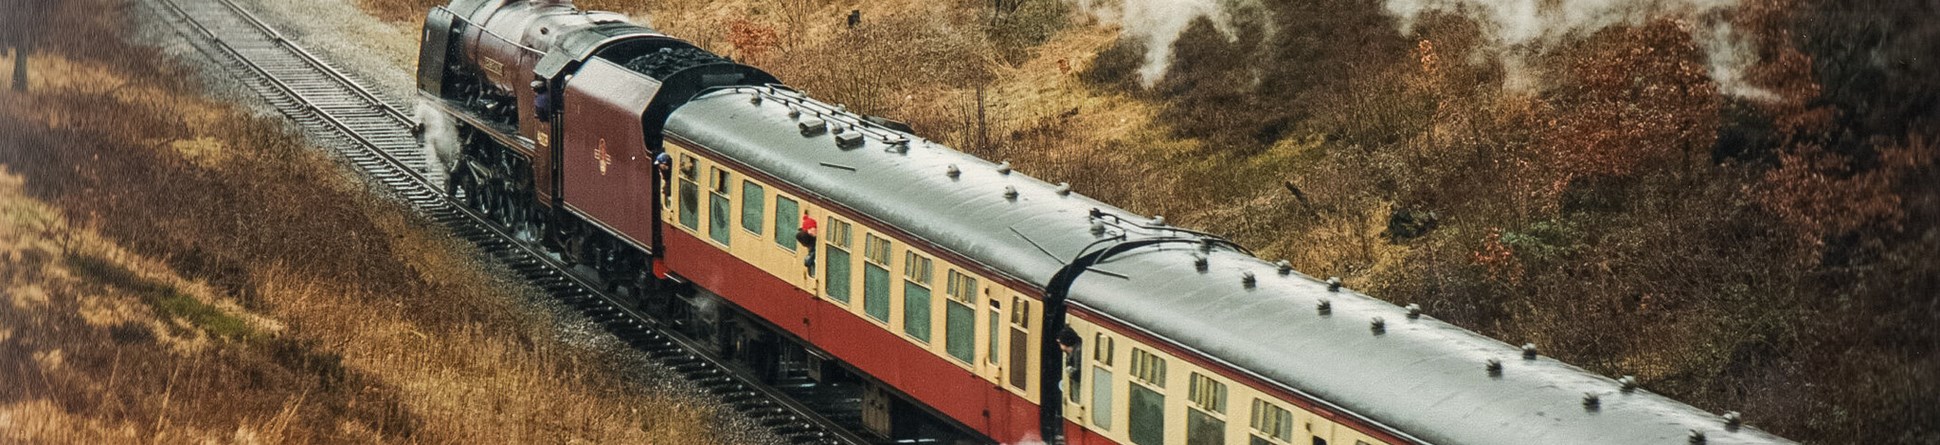 A train on the East Lancashire Light Railway emitting a plume of smoke.